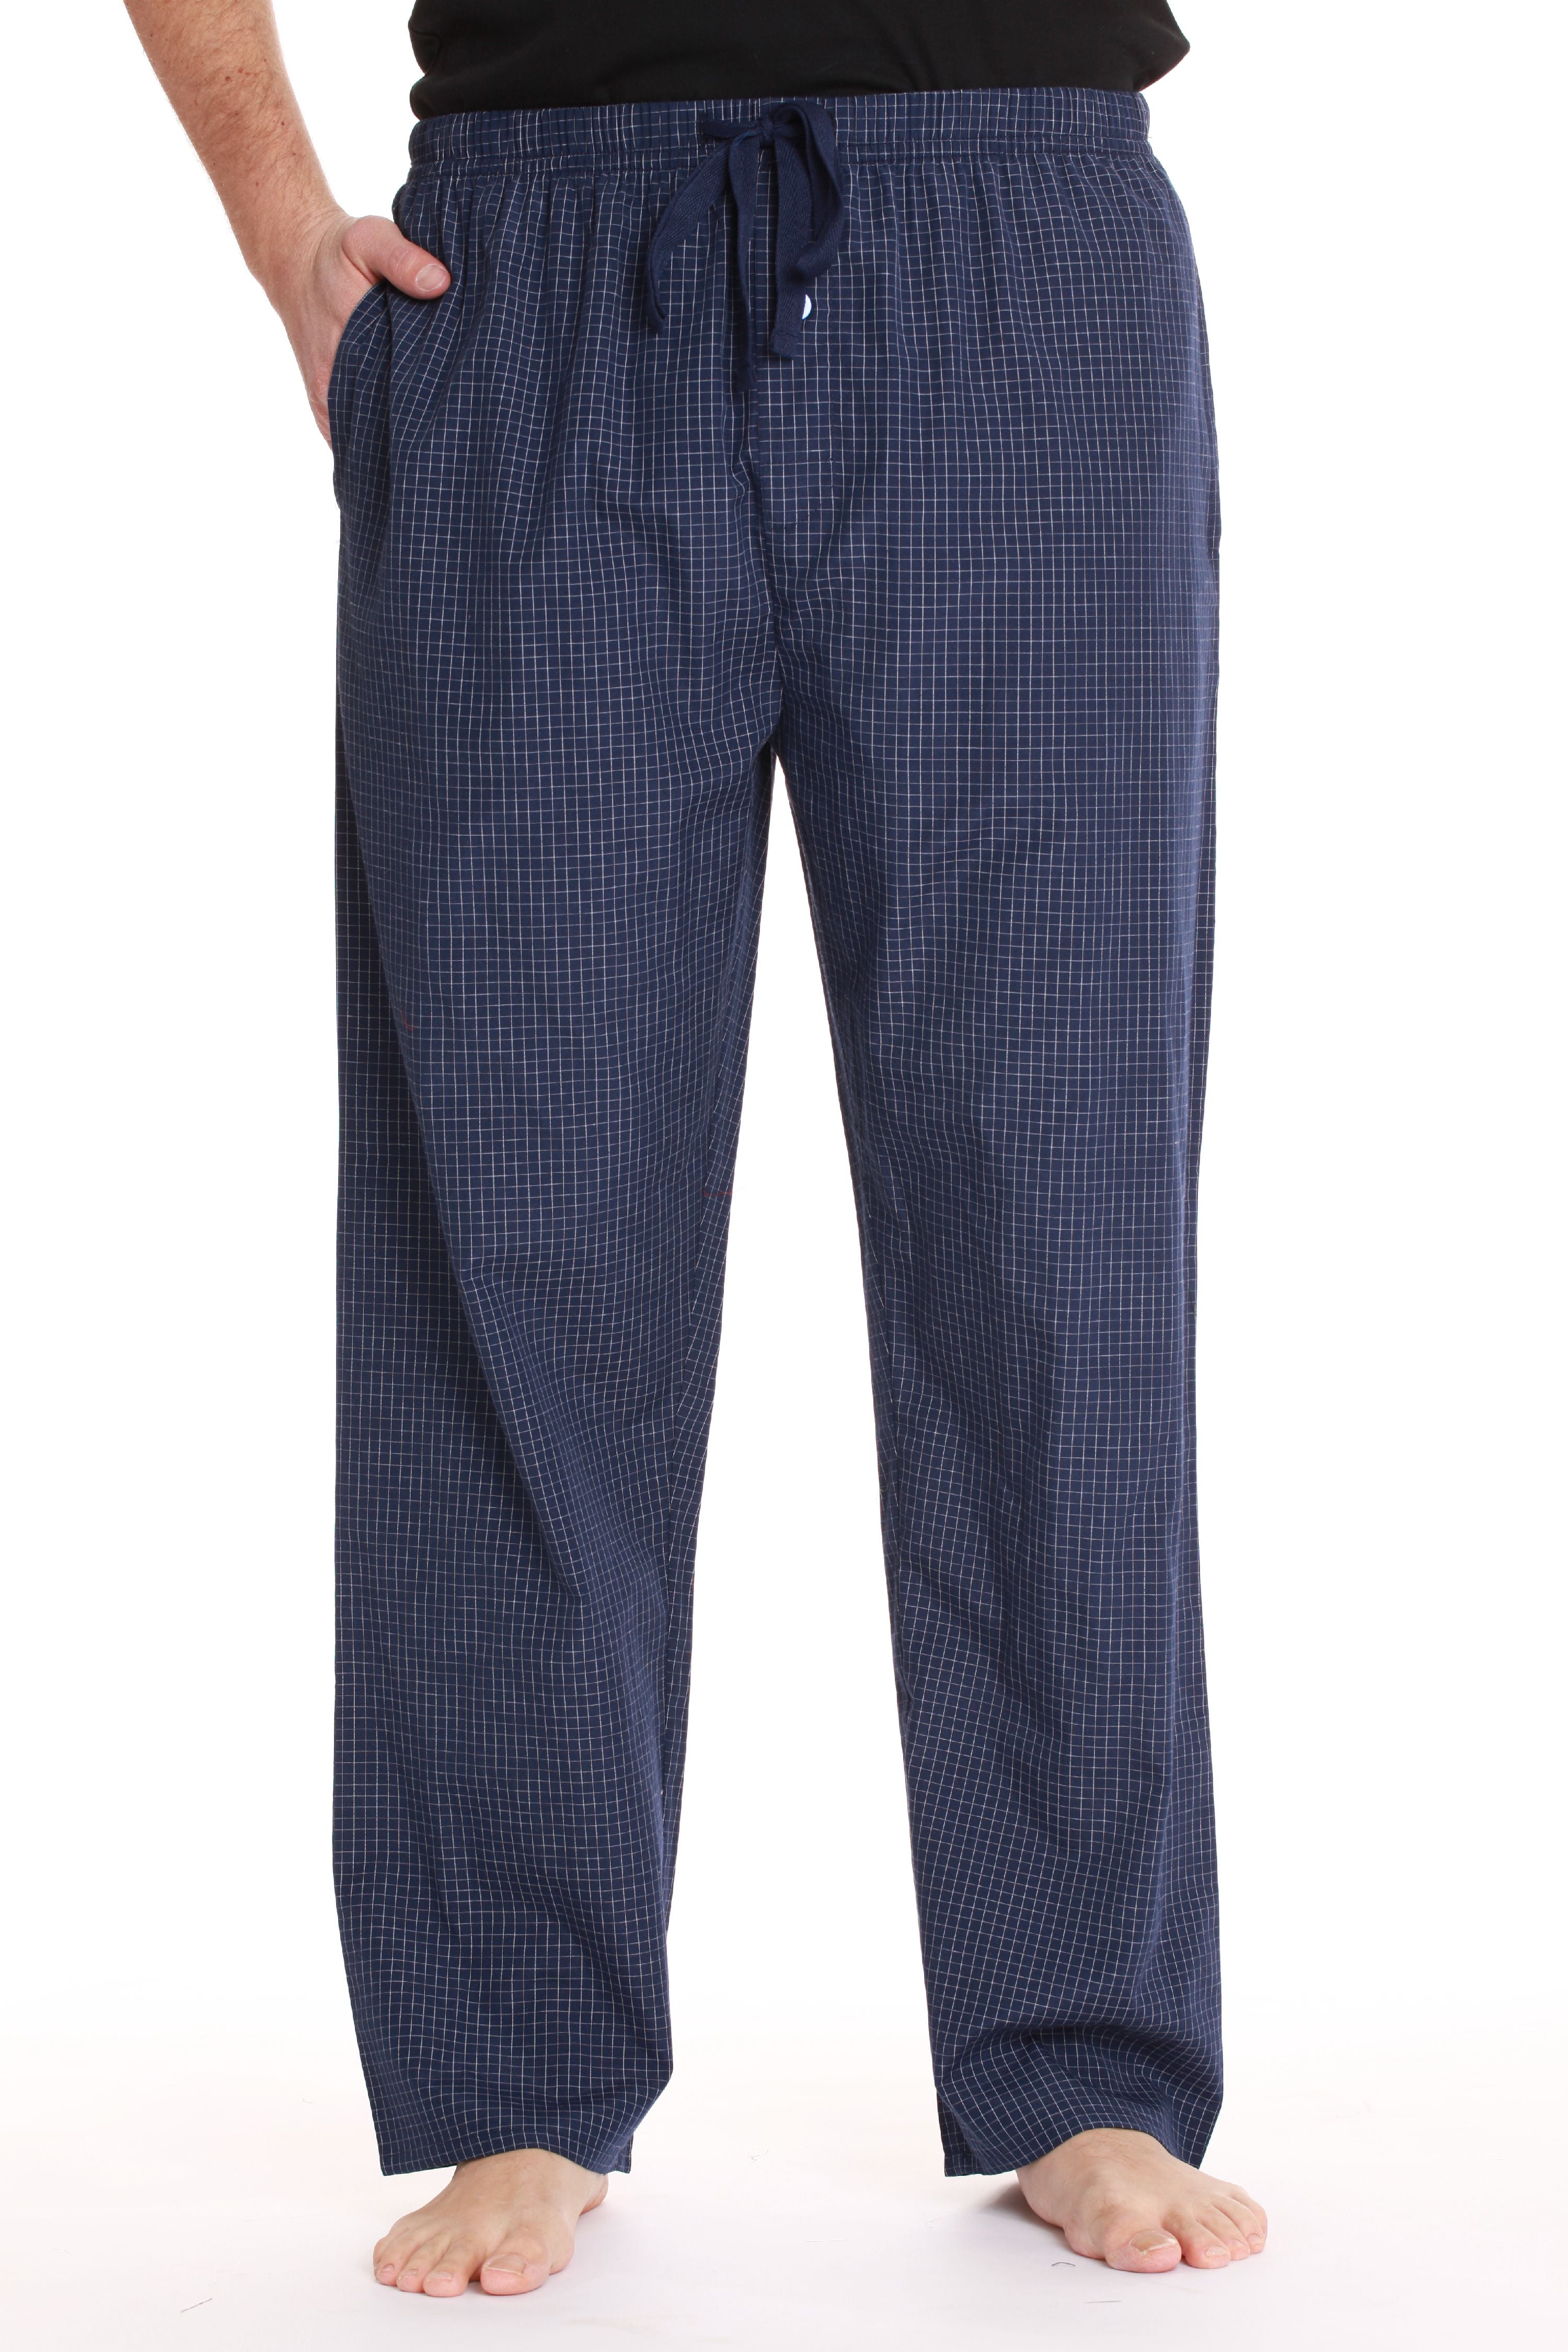 #followme Mens Pajama Pants Pajamas for Men (Navy White, Large ...